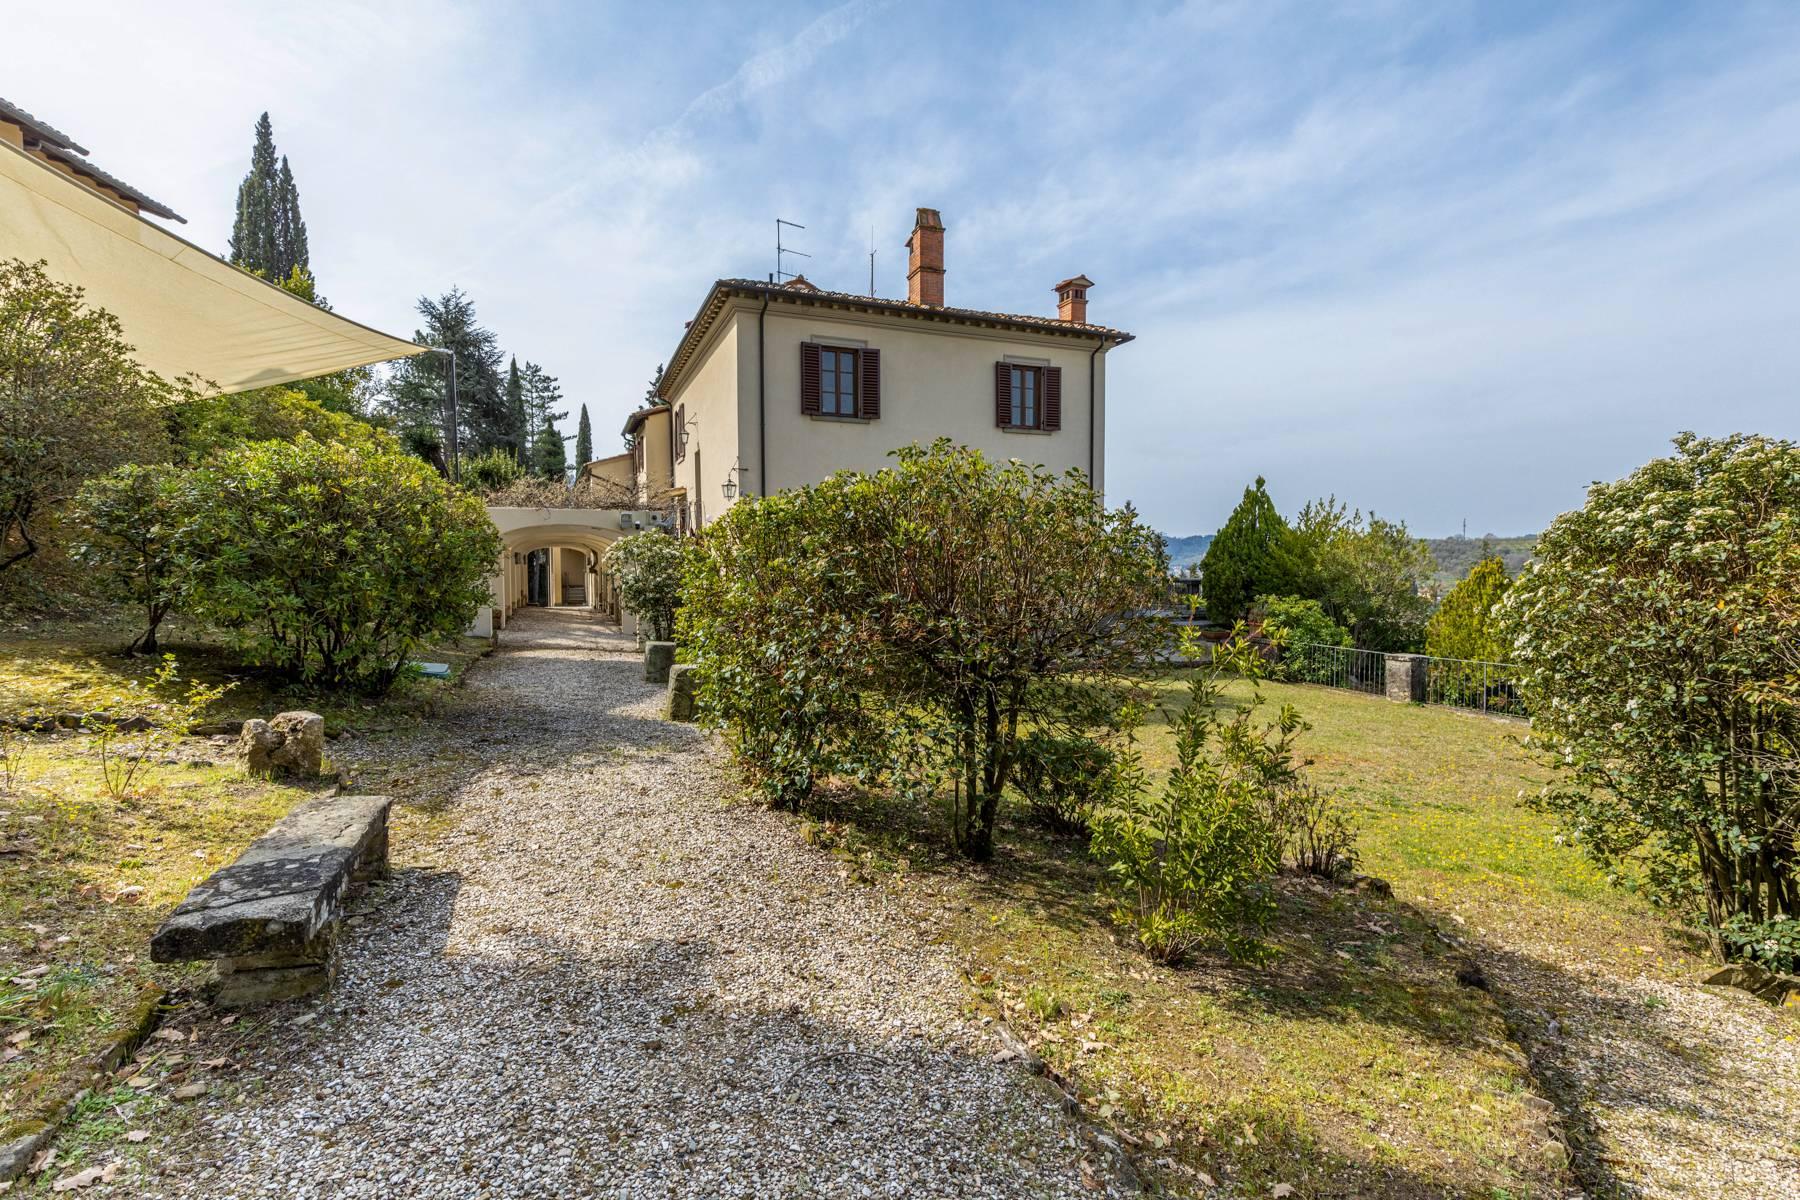 Historical villa dating back to the XVII century overlooking Arezzo - 2